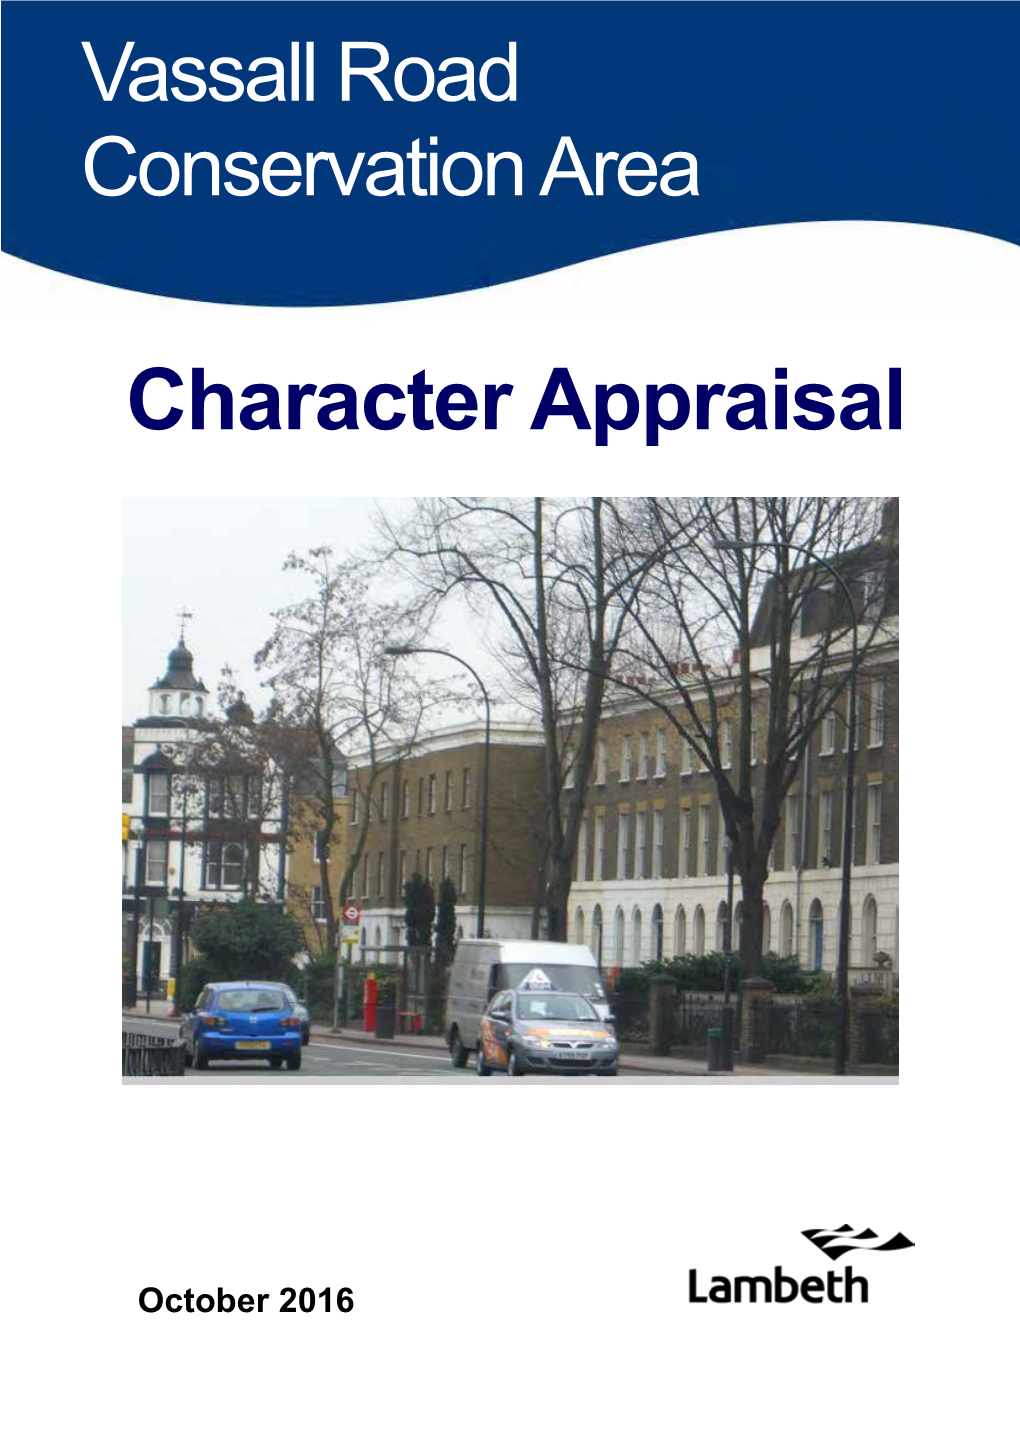 Vassall Road Conservation Area Character Appraisal